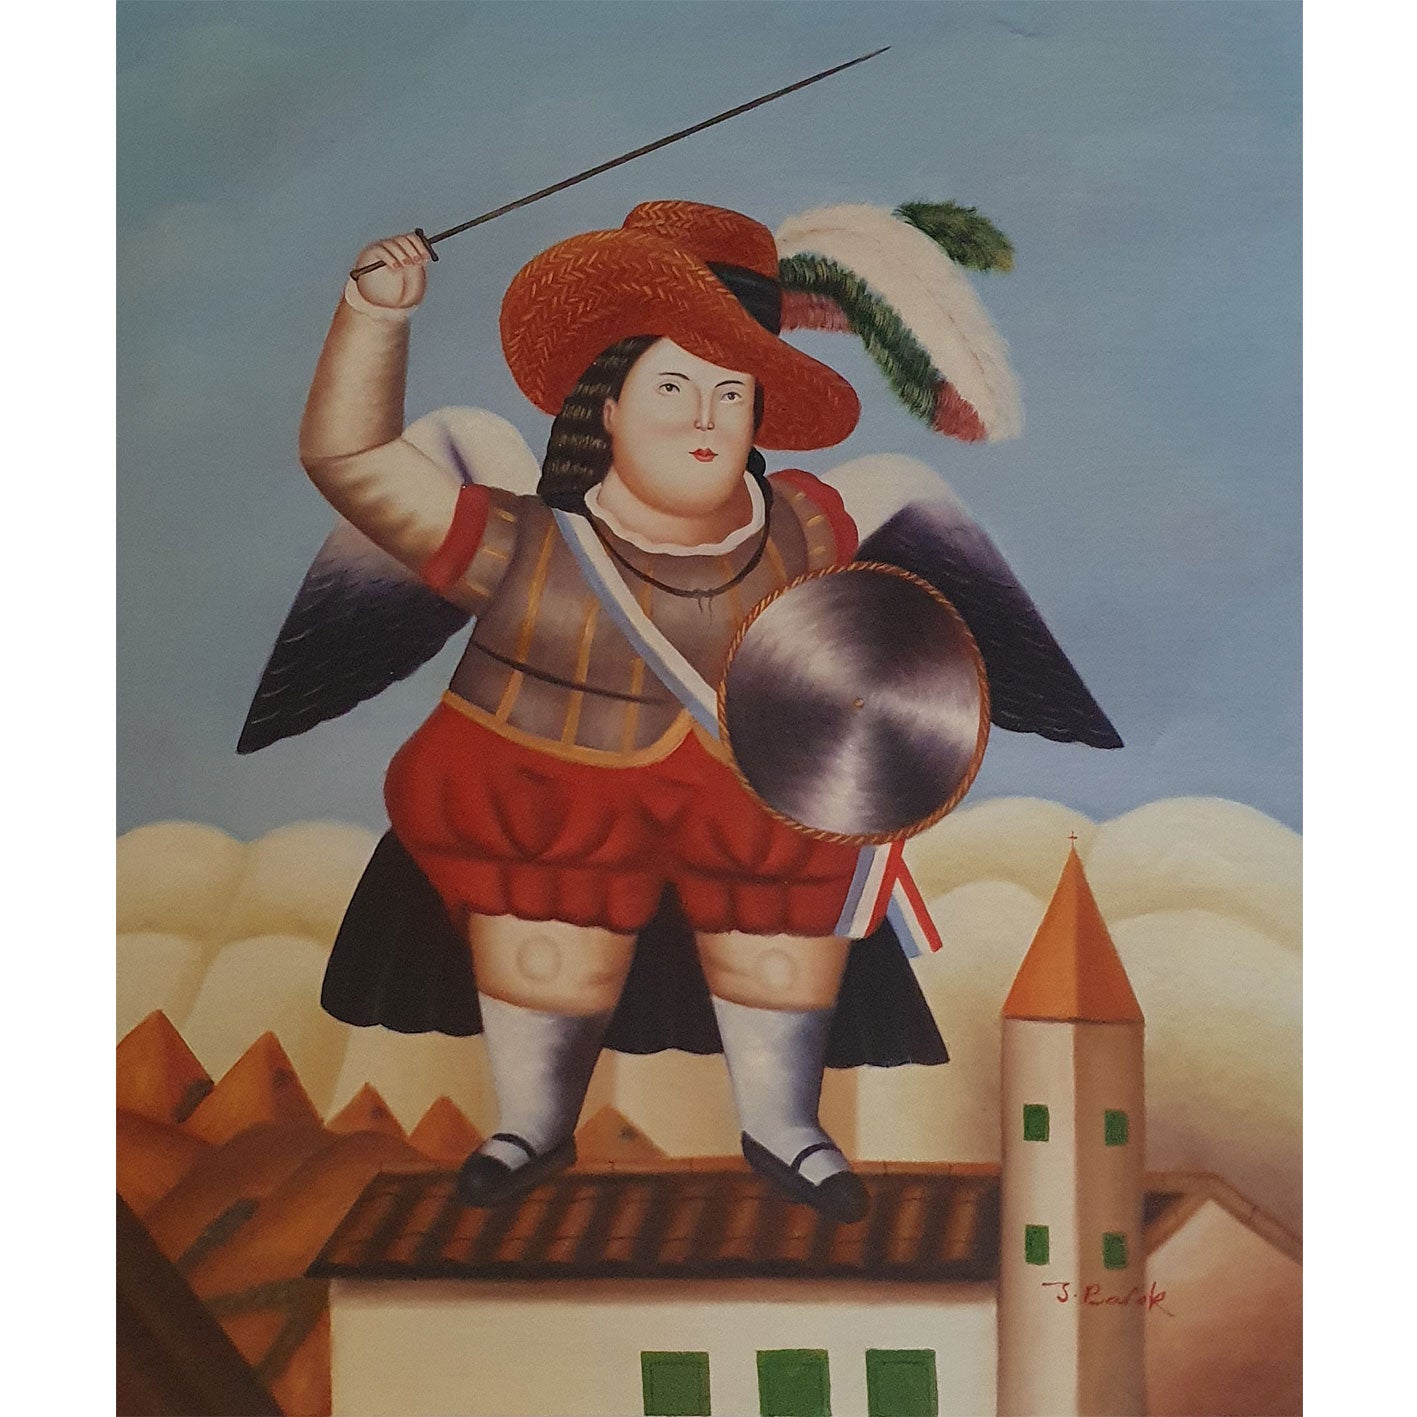 Archangel Botero painting 50x60 cm